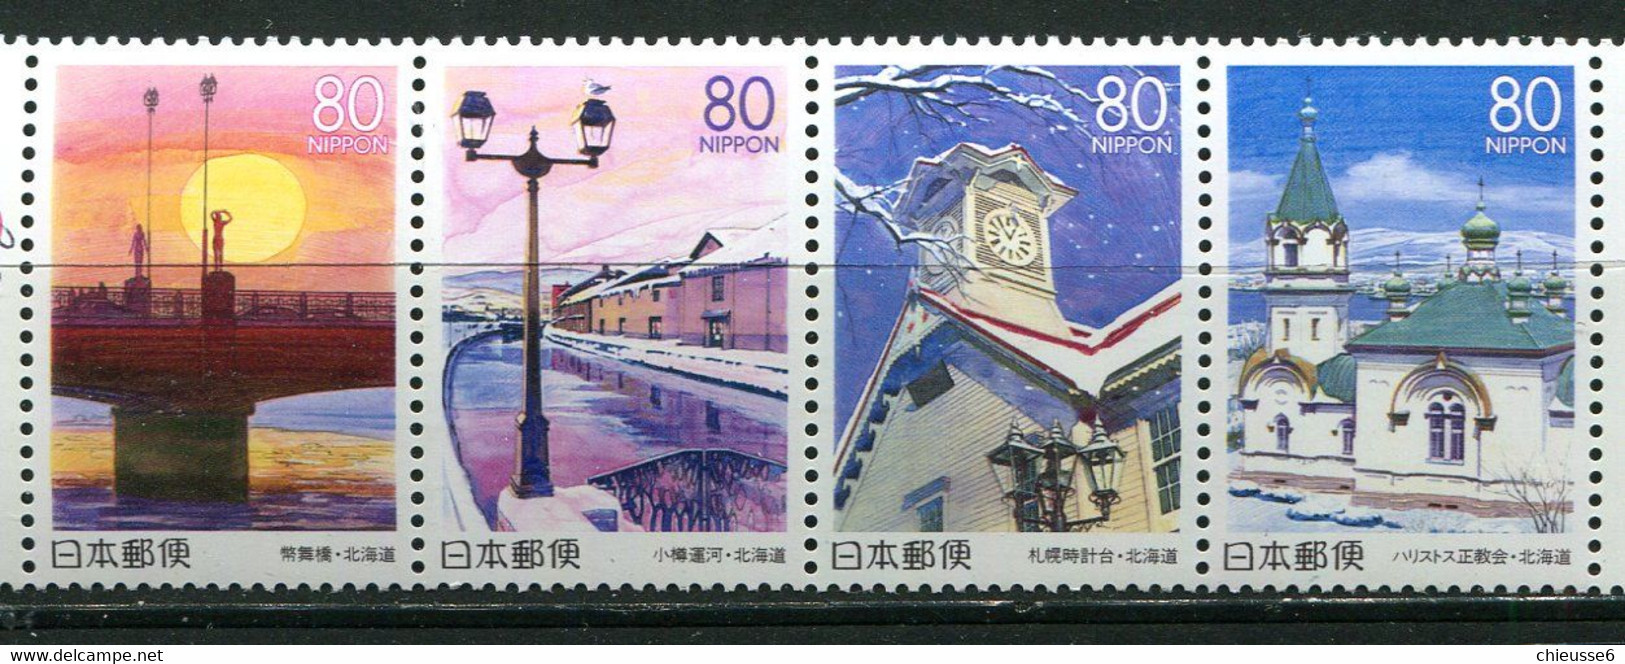 Japon ** N° 2743 à 2746 Se Tenant -  Emission Régionale. Hokkaido - Unused Stamps